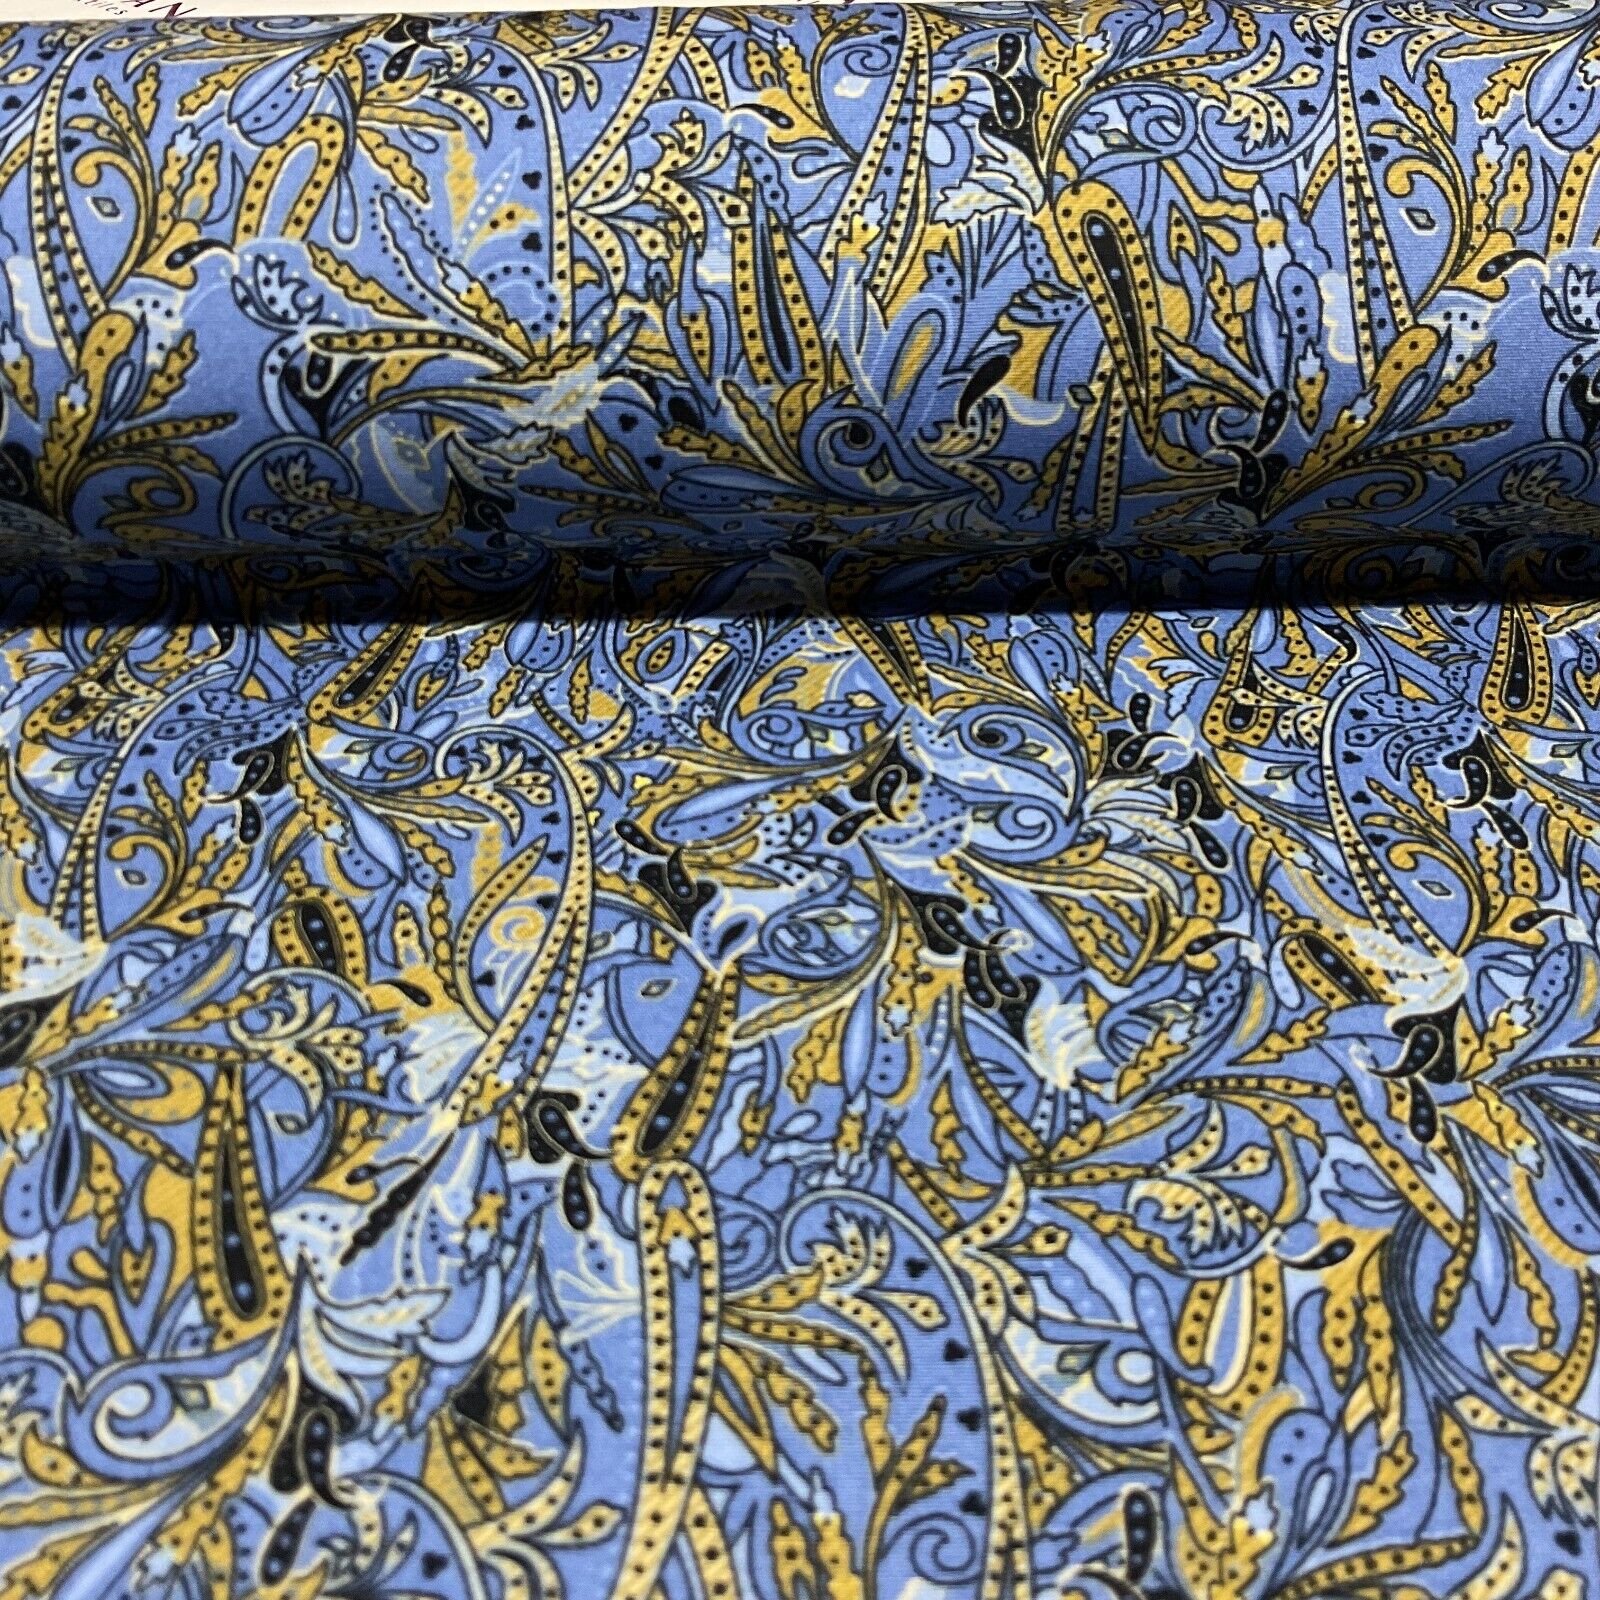 Vintage Paisley Cotton Poplin printed dress craft fabric 112cm wide M1743